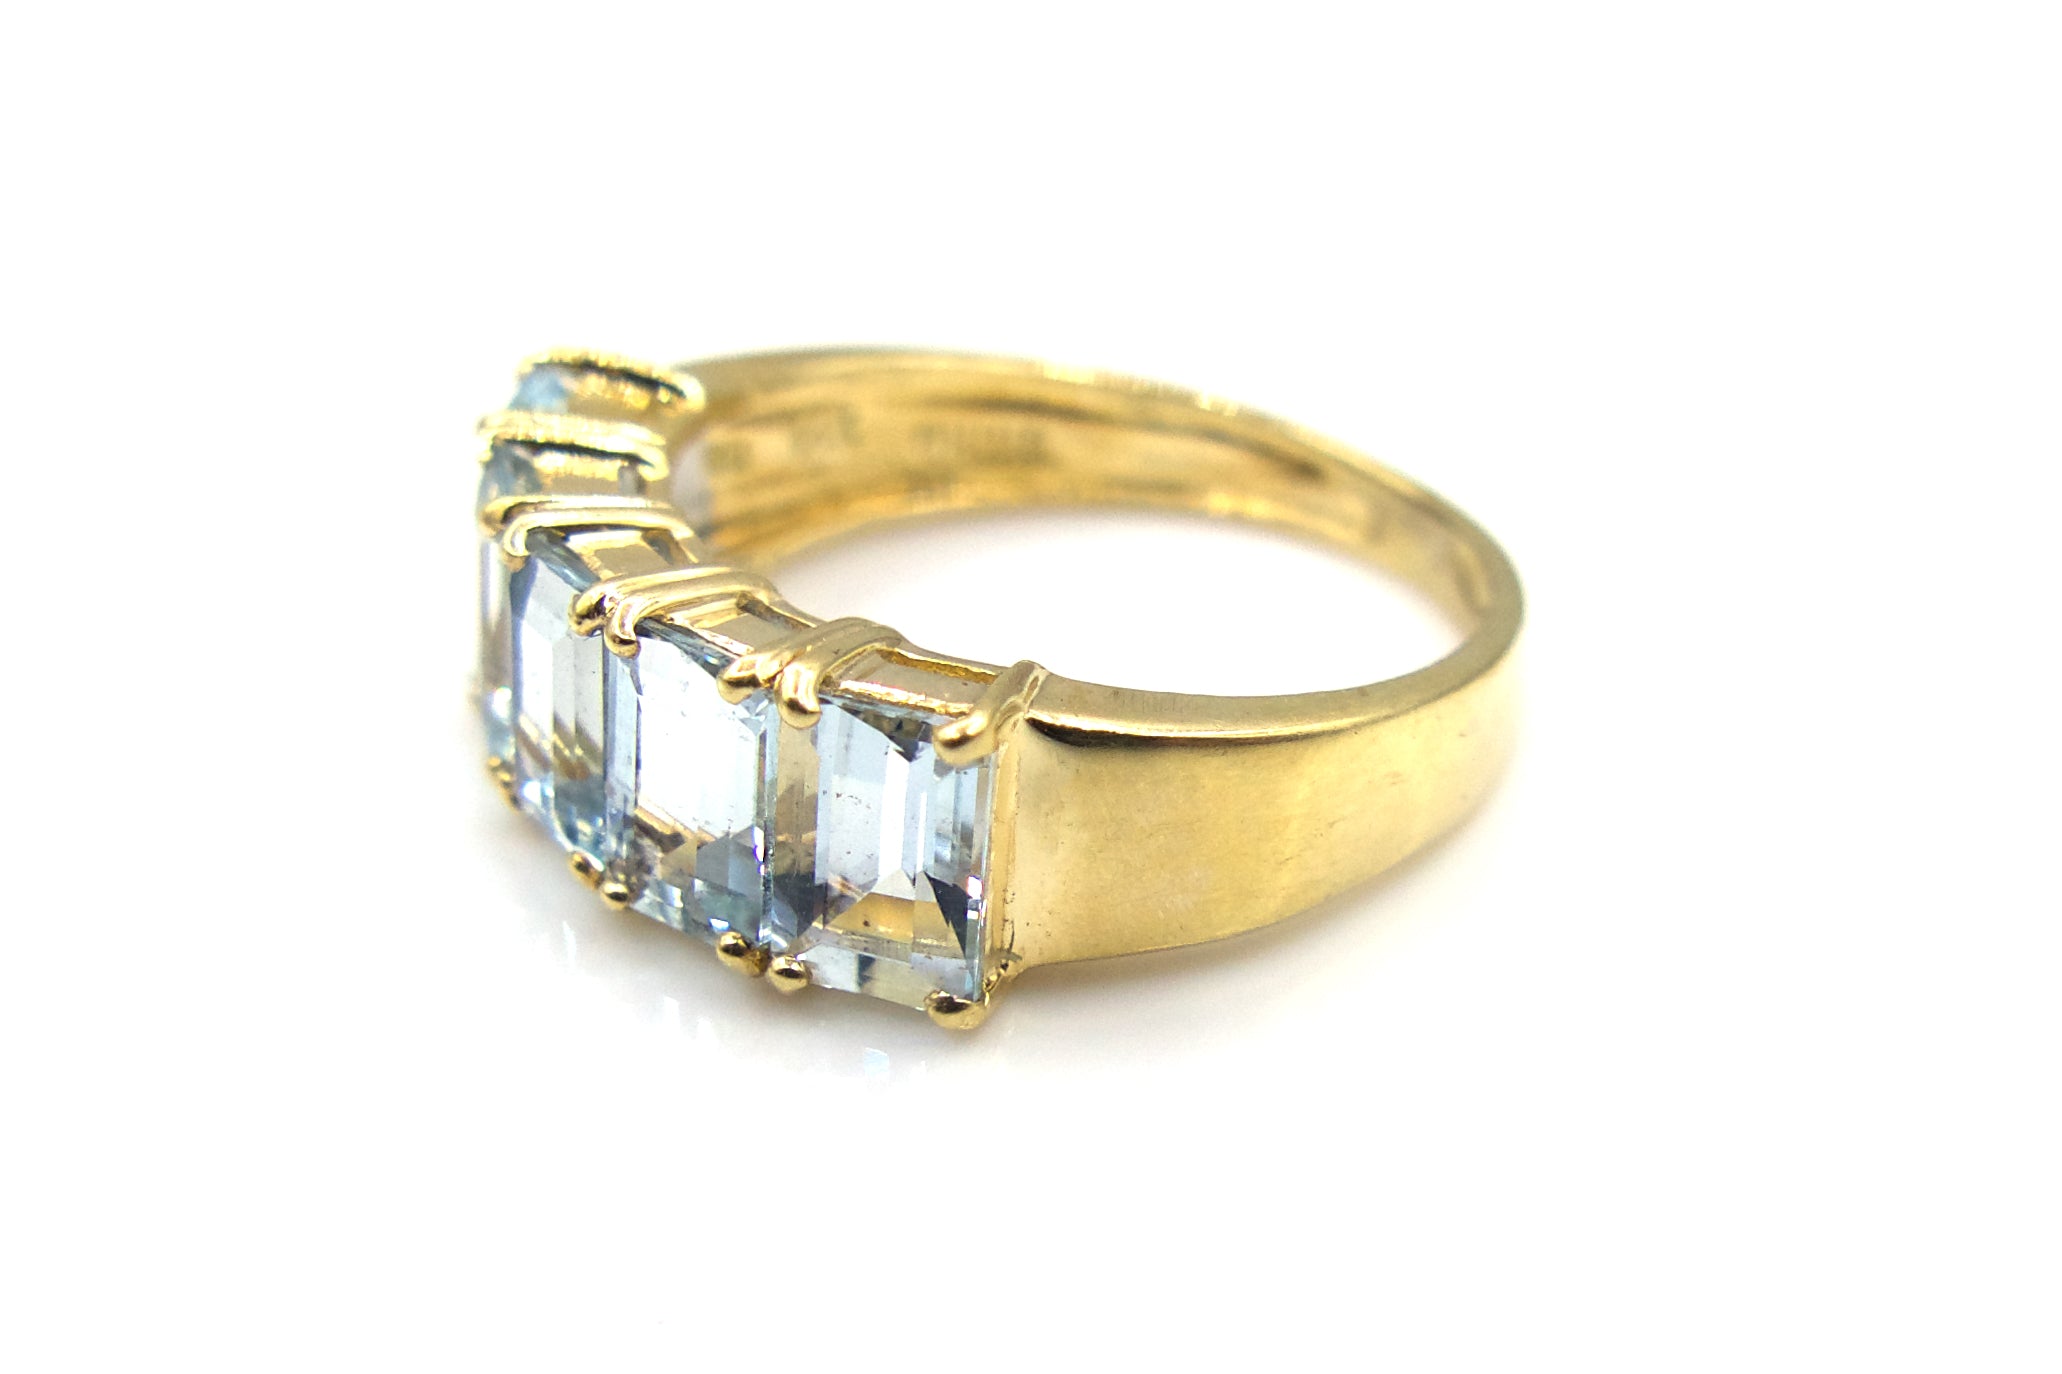 Light Blue Emerald Cut Topaz Row Ring in 14K Gold